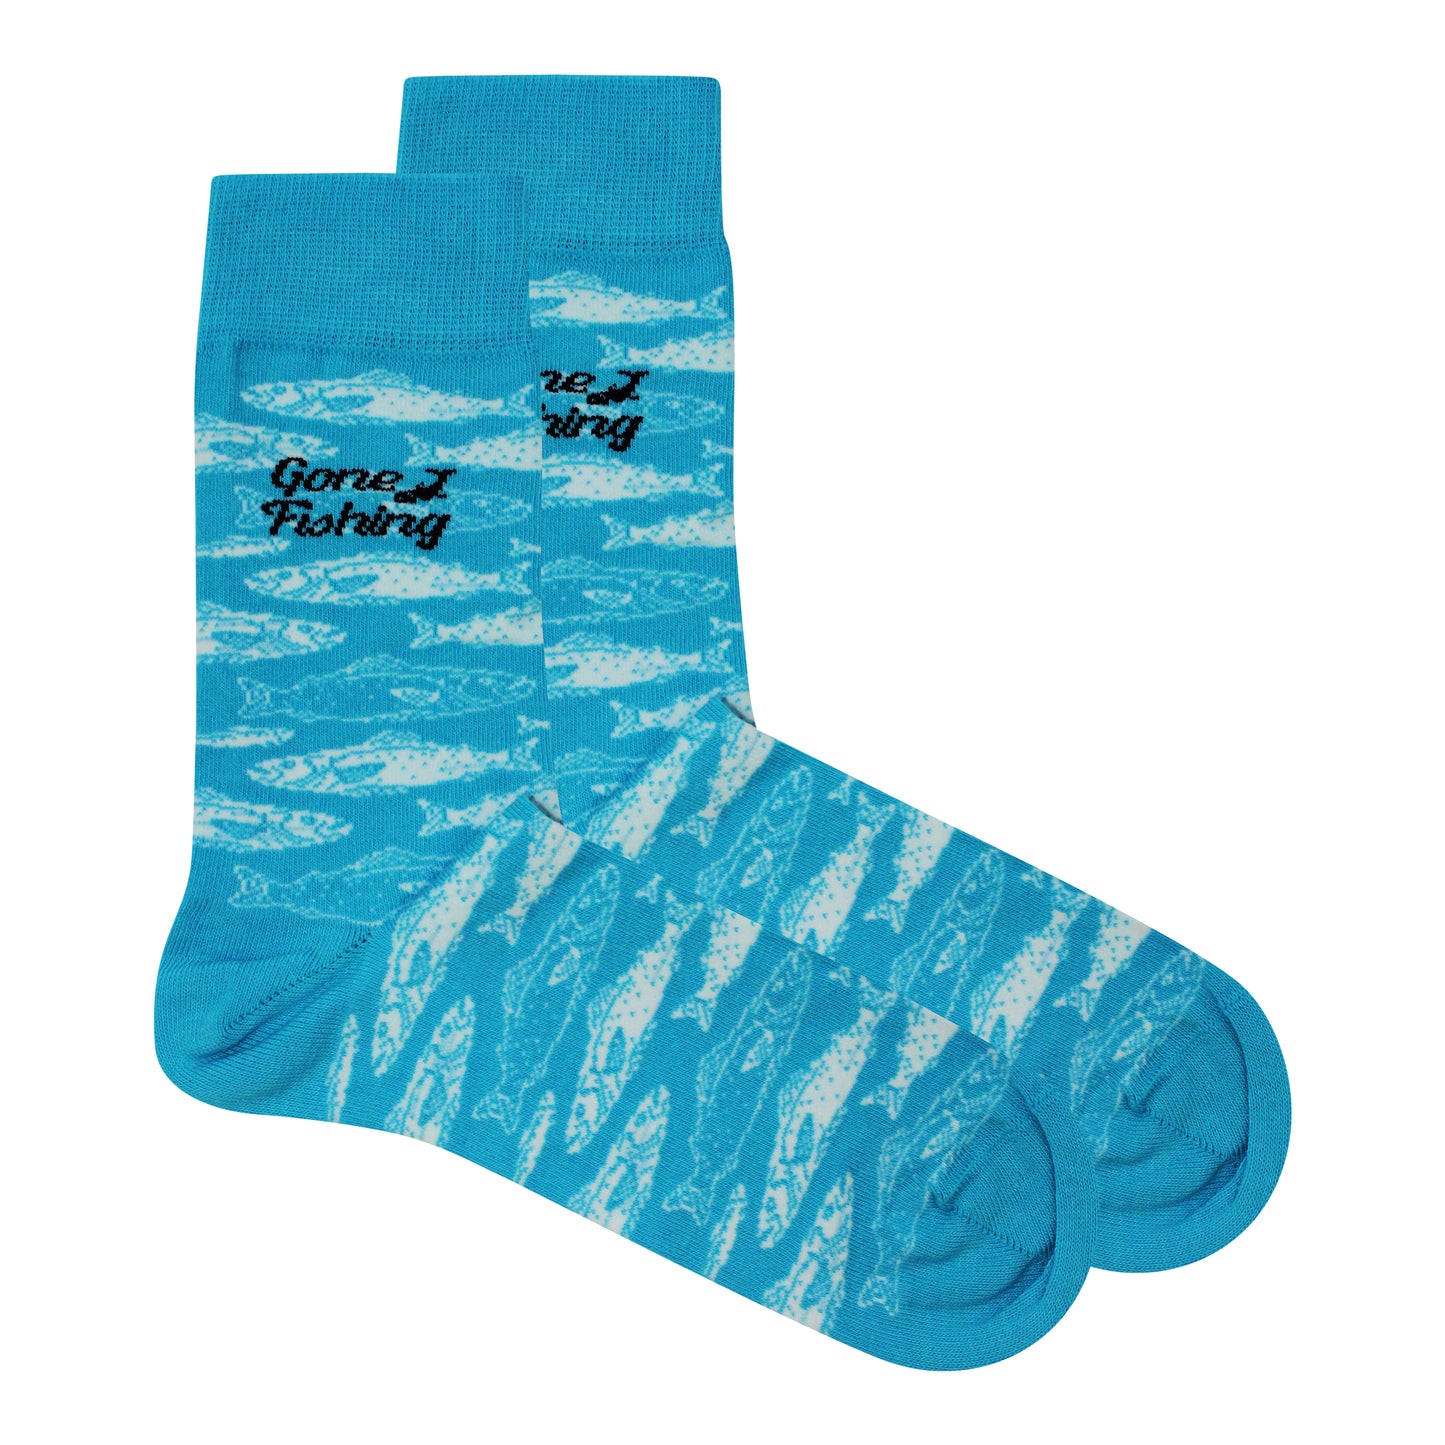 'Gone Fishing' Socks